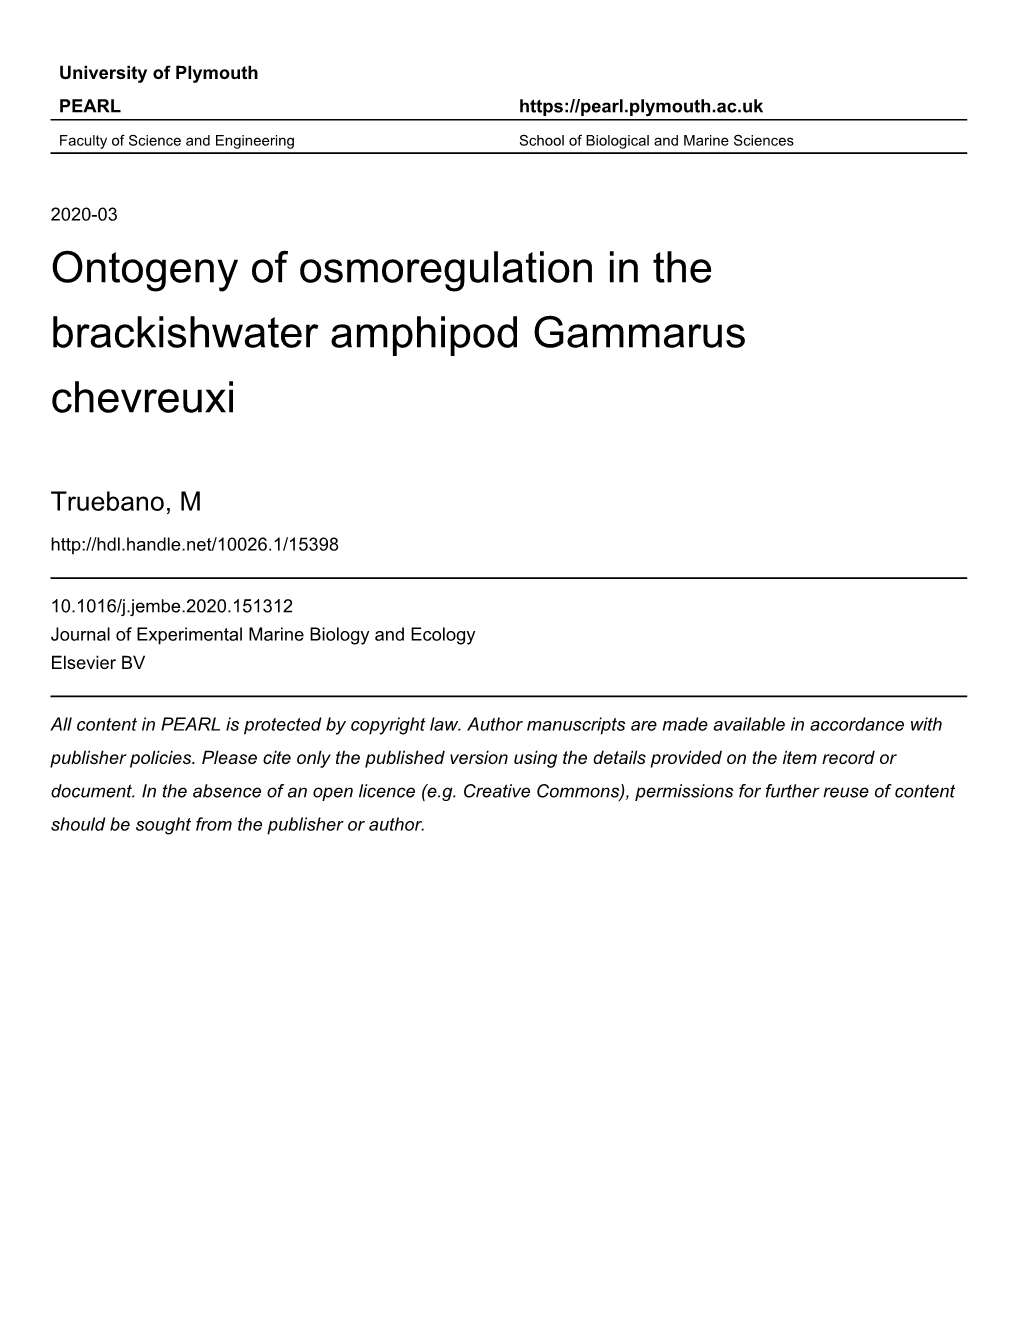 Ontogeny of Osmoregulation in the Brackishwater Amphipod Gammarus Chevreuxi